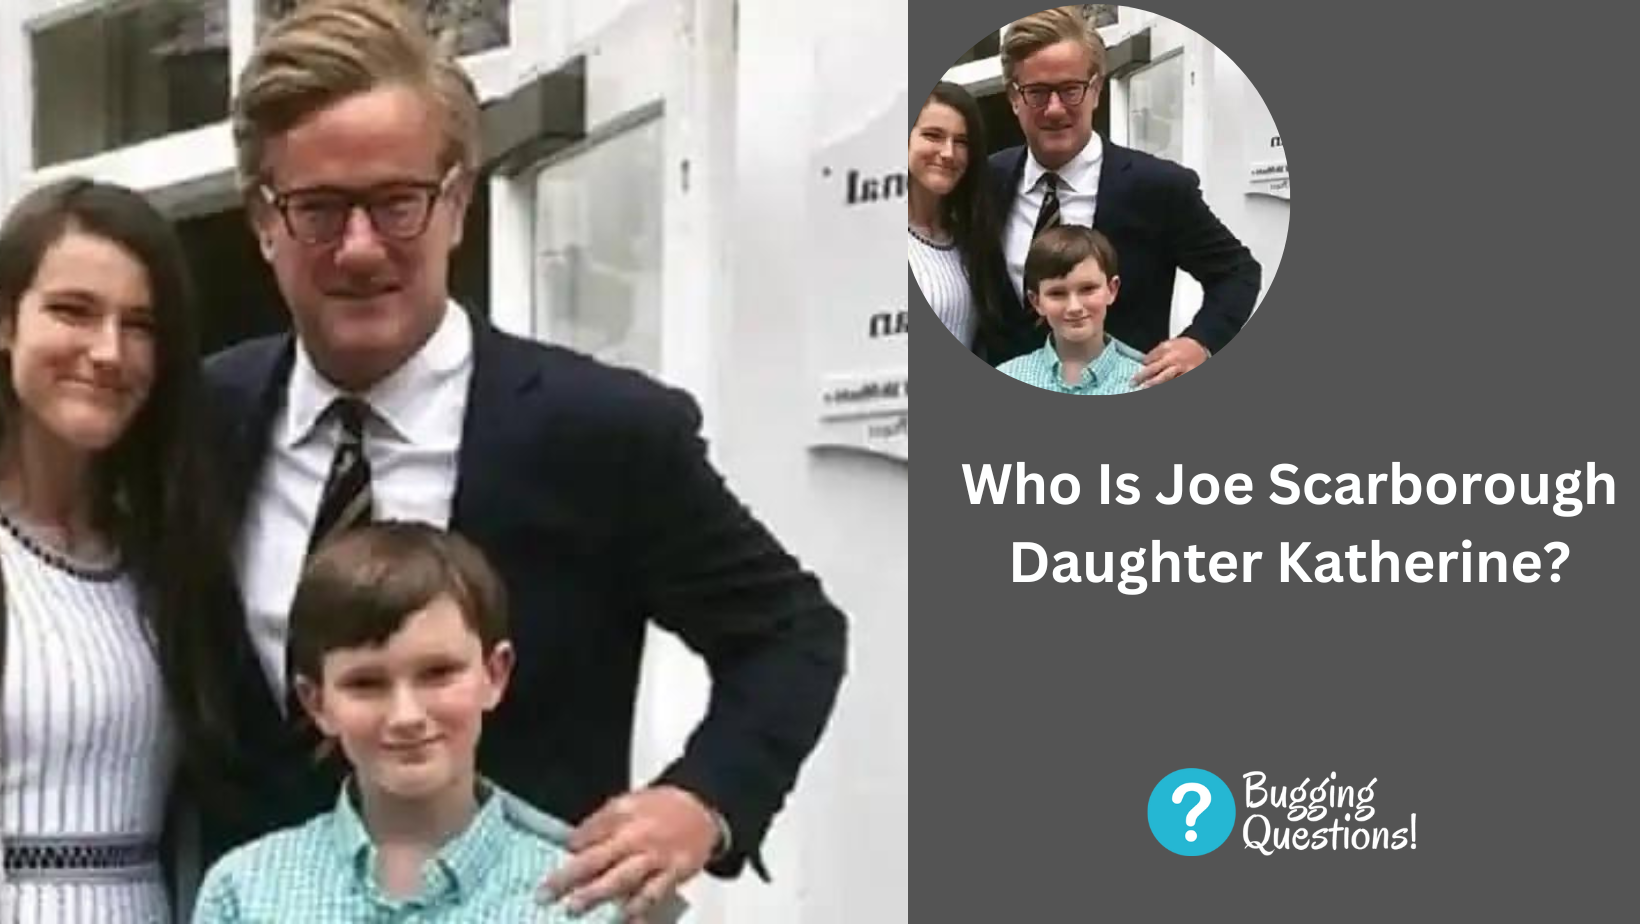 Who Is Joe Scarborough Daughter Katherine?